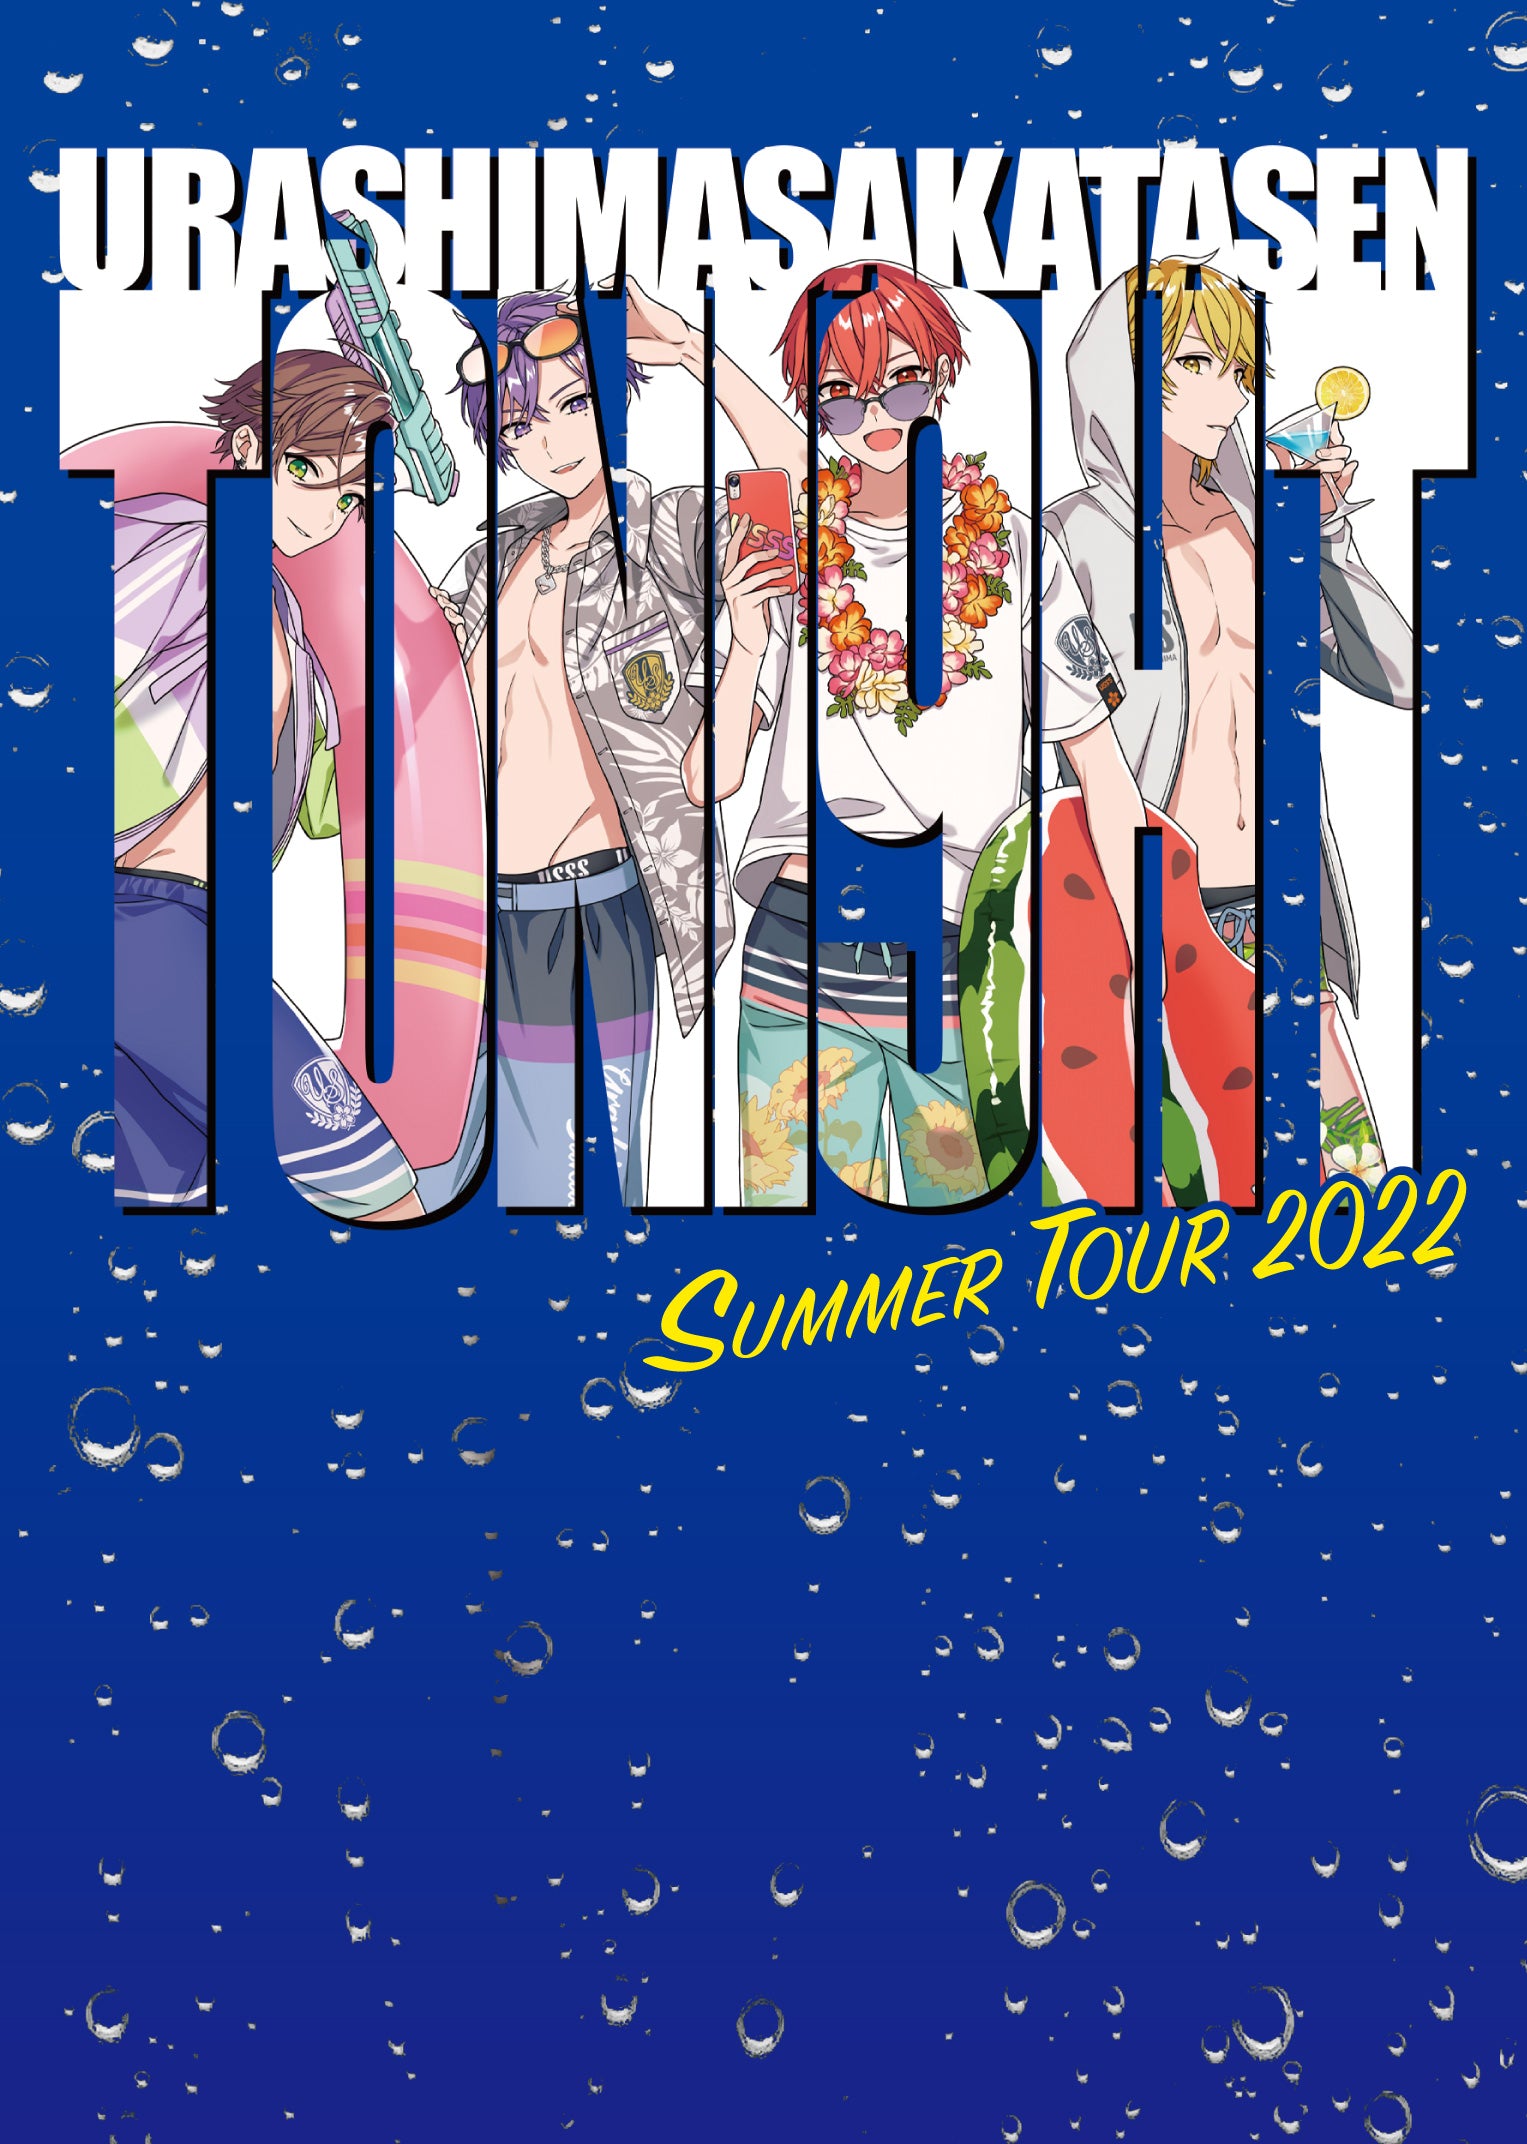 DVD/ブルーレイ【Blu-ray】「浦島坂田船 SUMMER TOUR 2022 Toni9ht